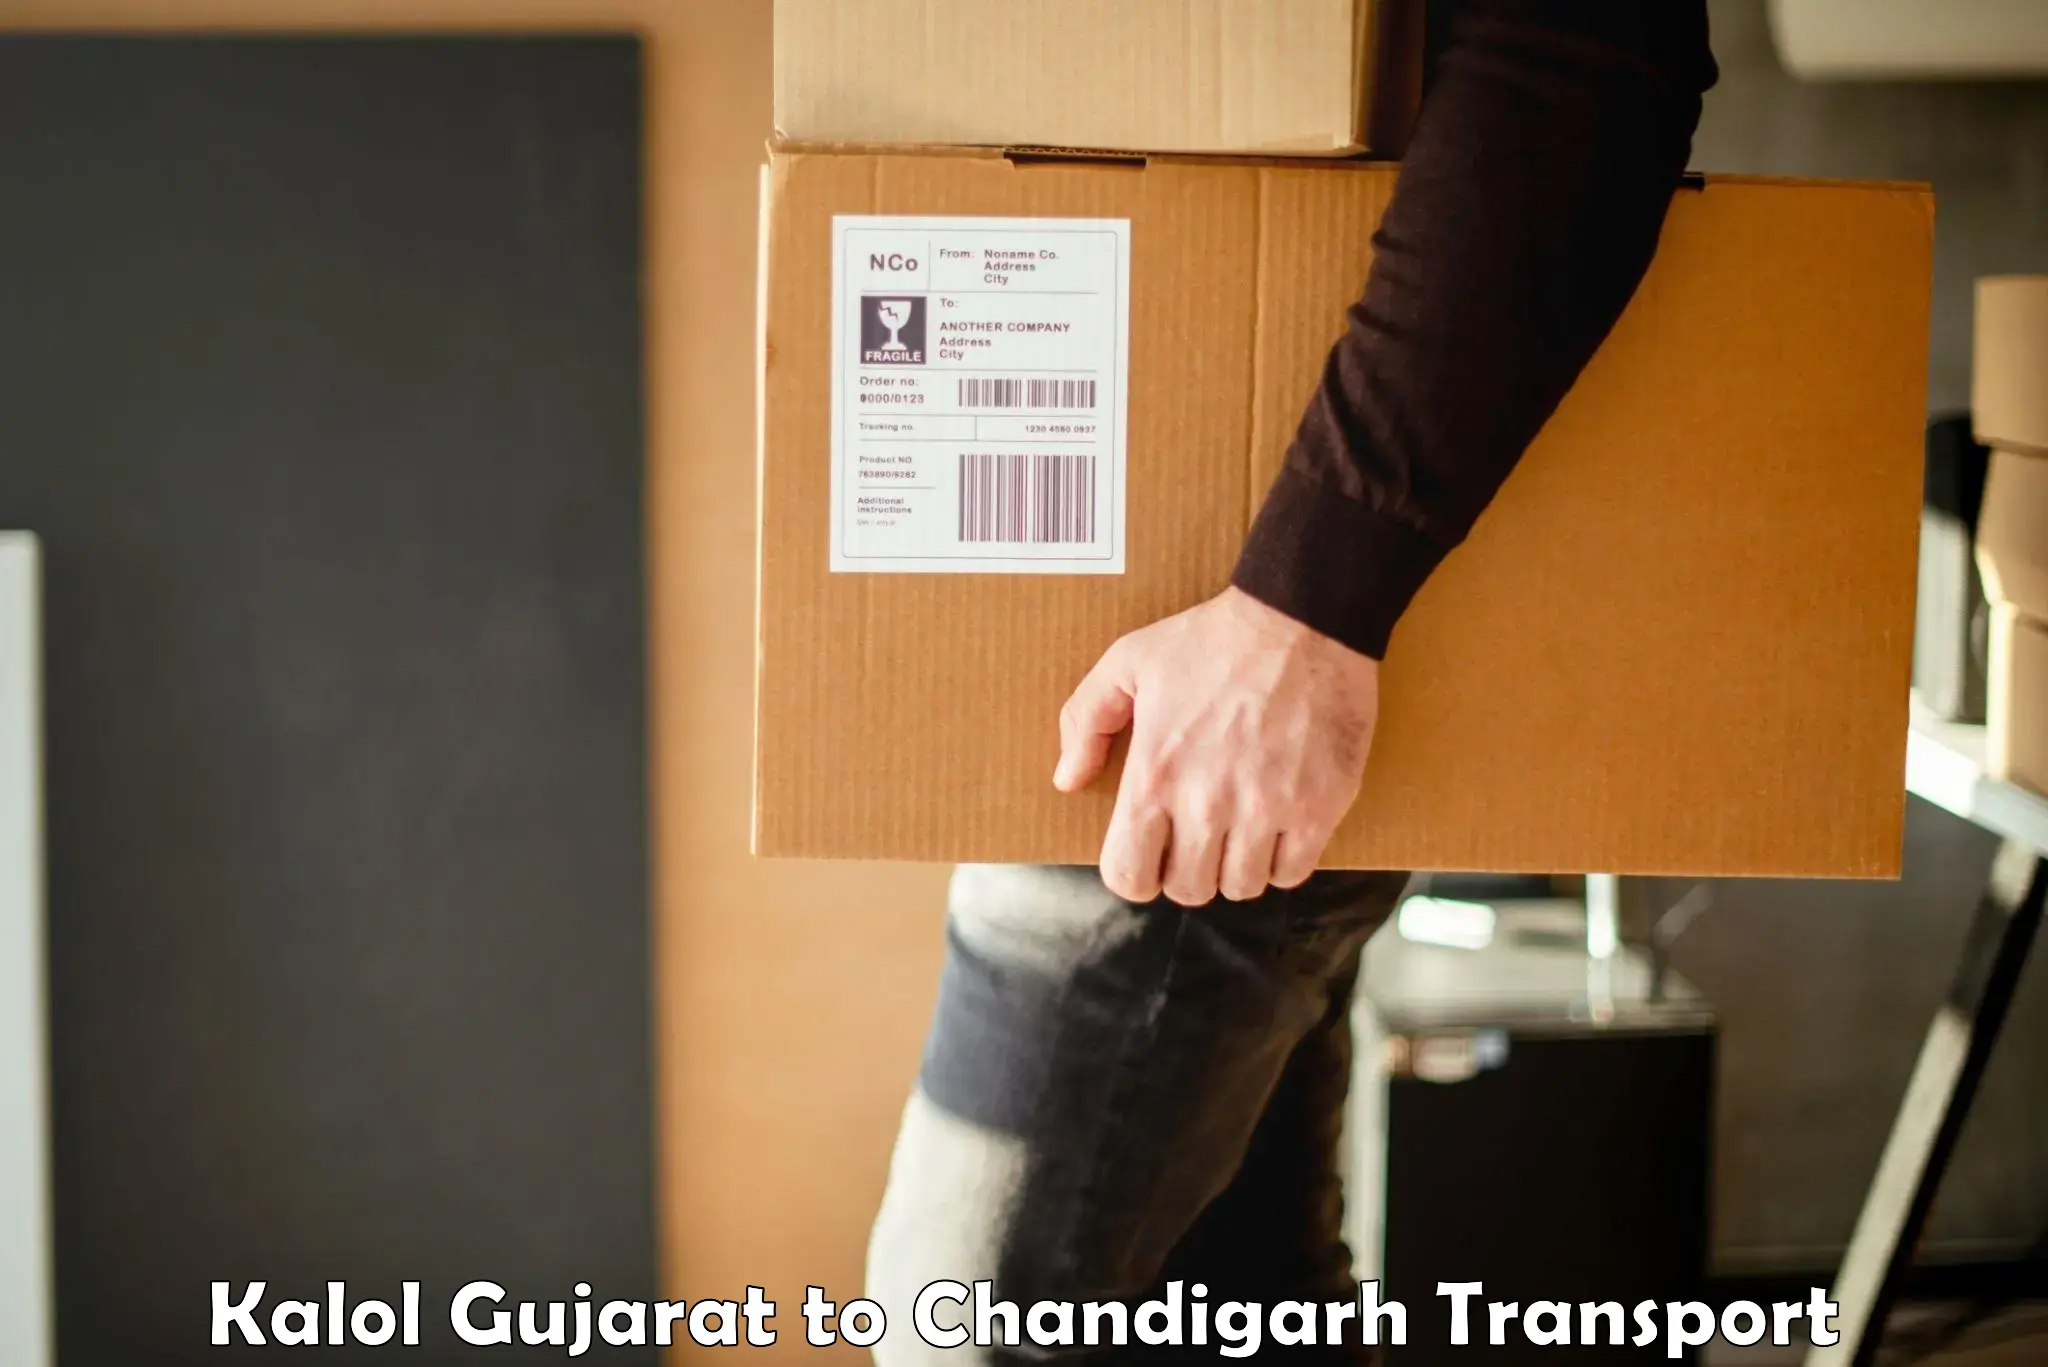 Truck transport companies in India Kalol Gujarat to Chandigarh